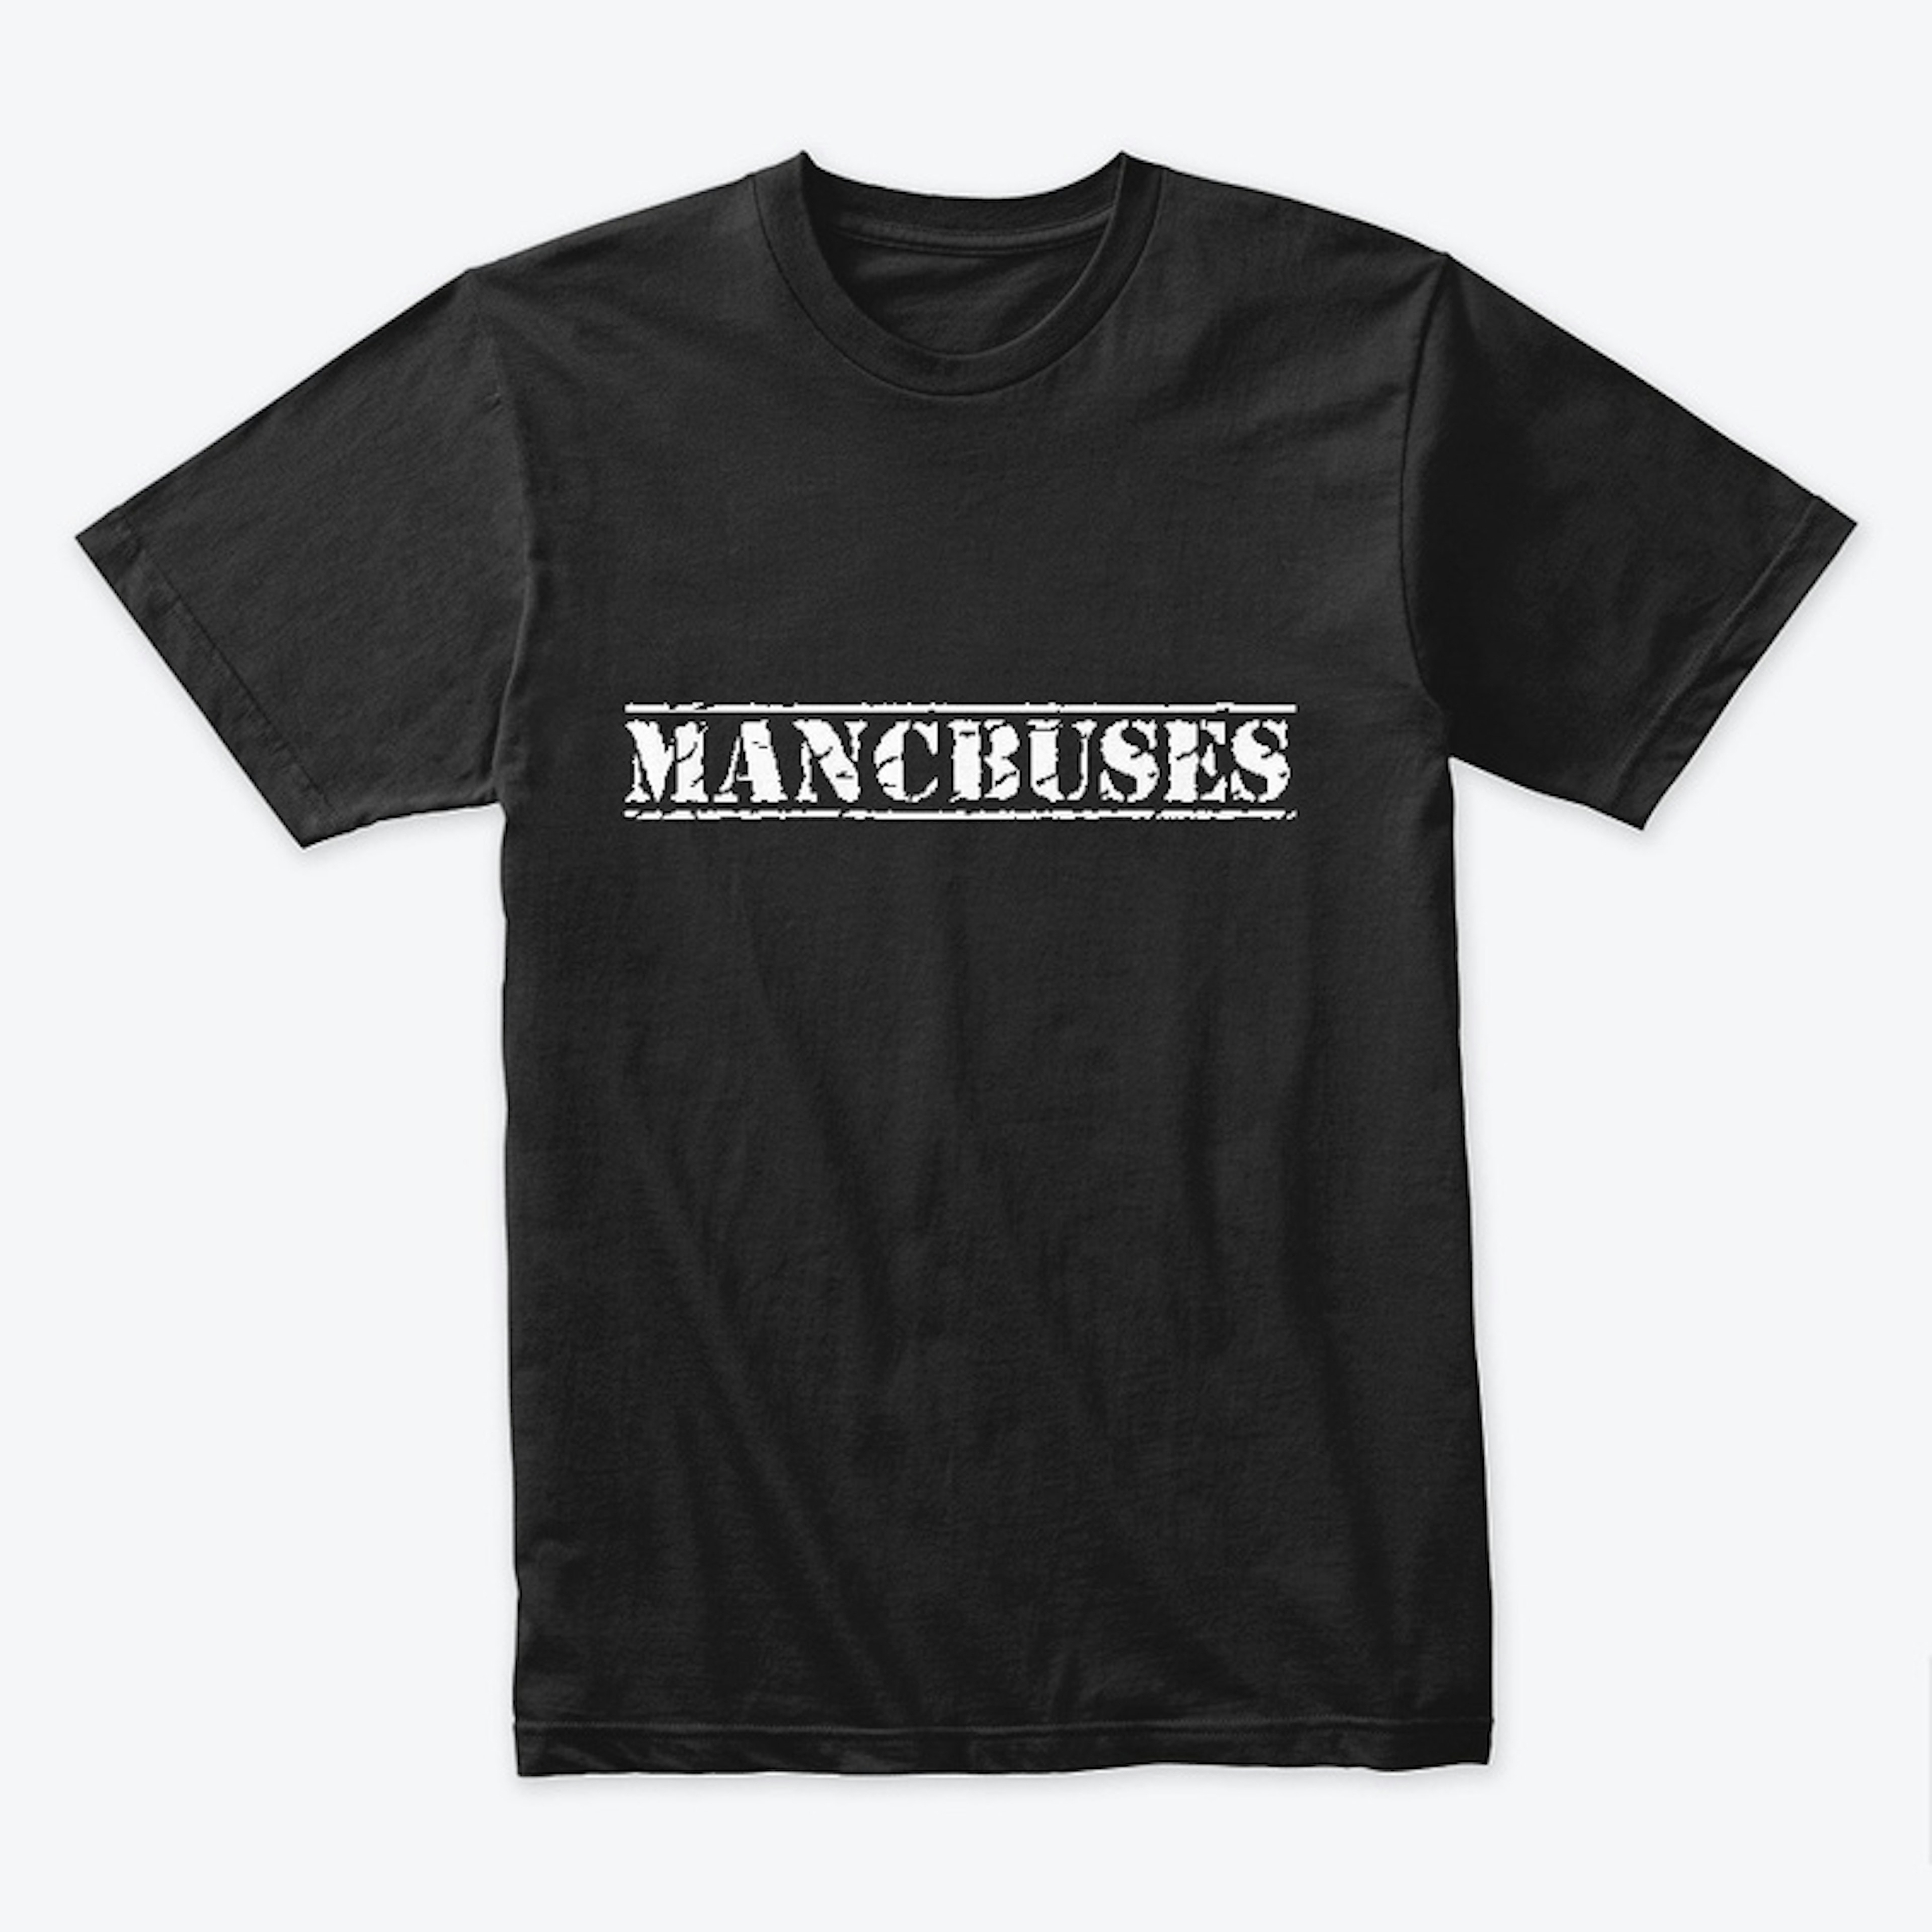 MancBuses T-Shirt